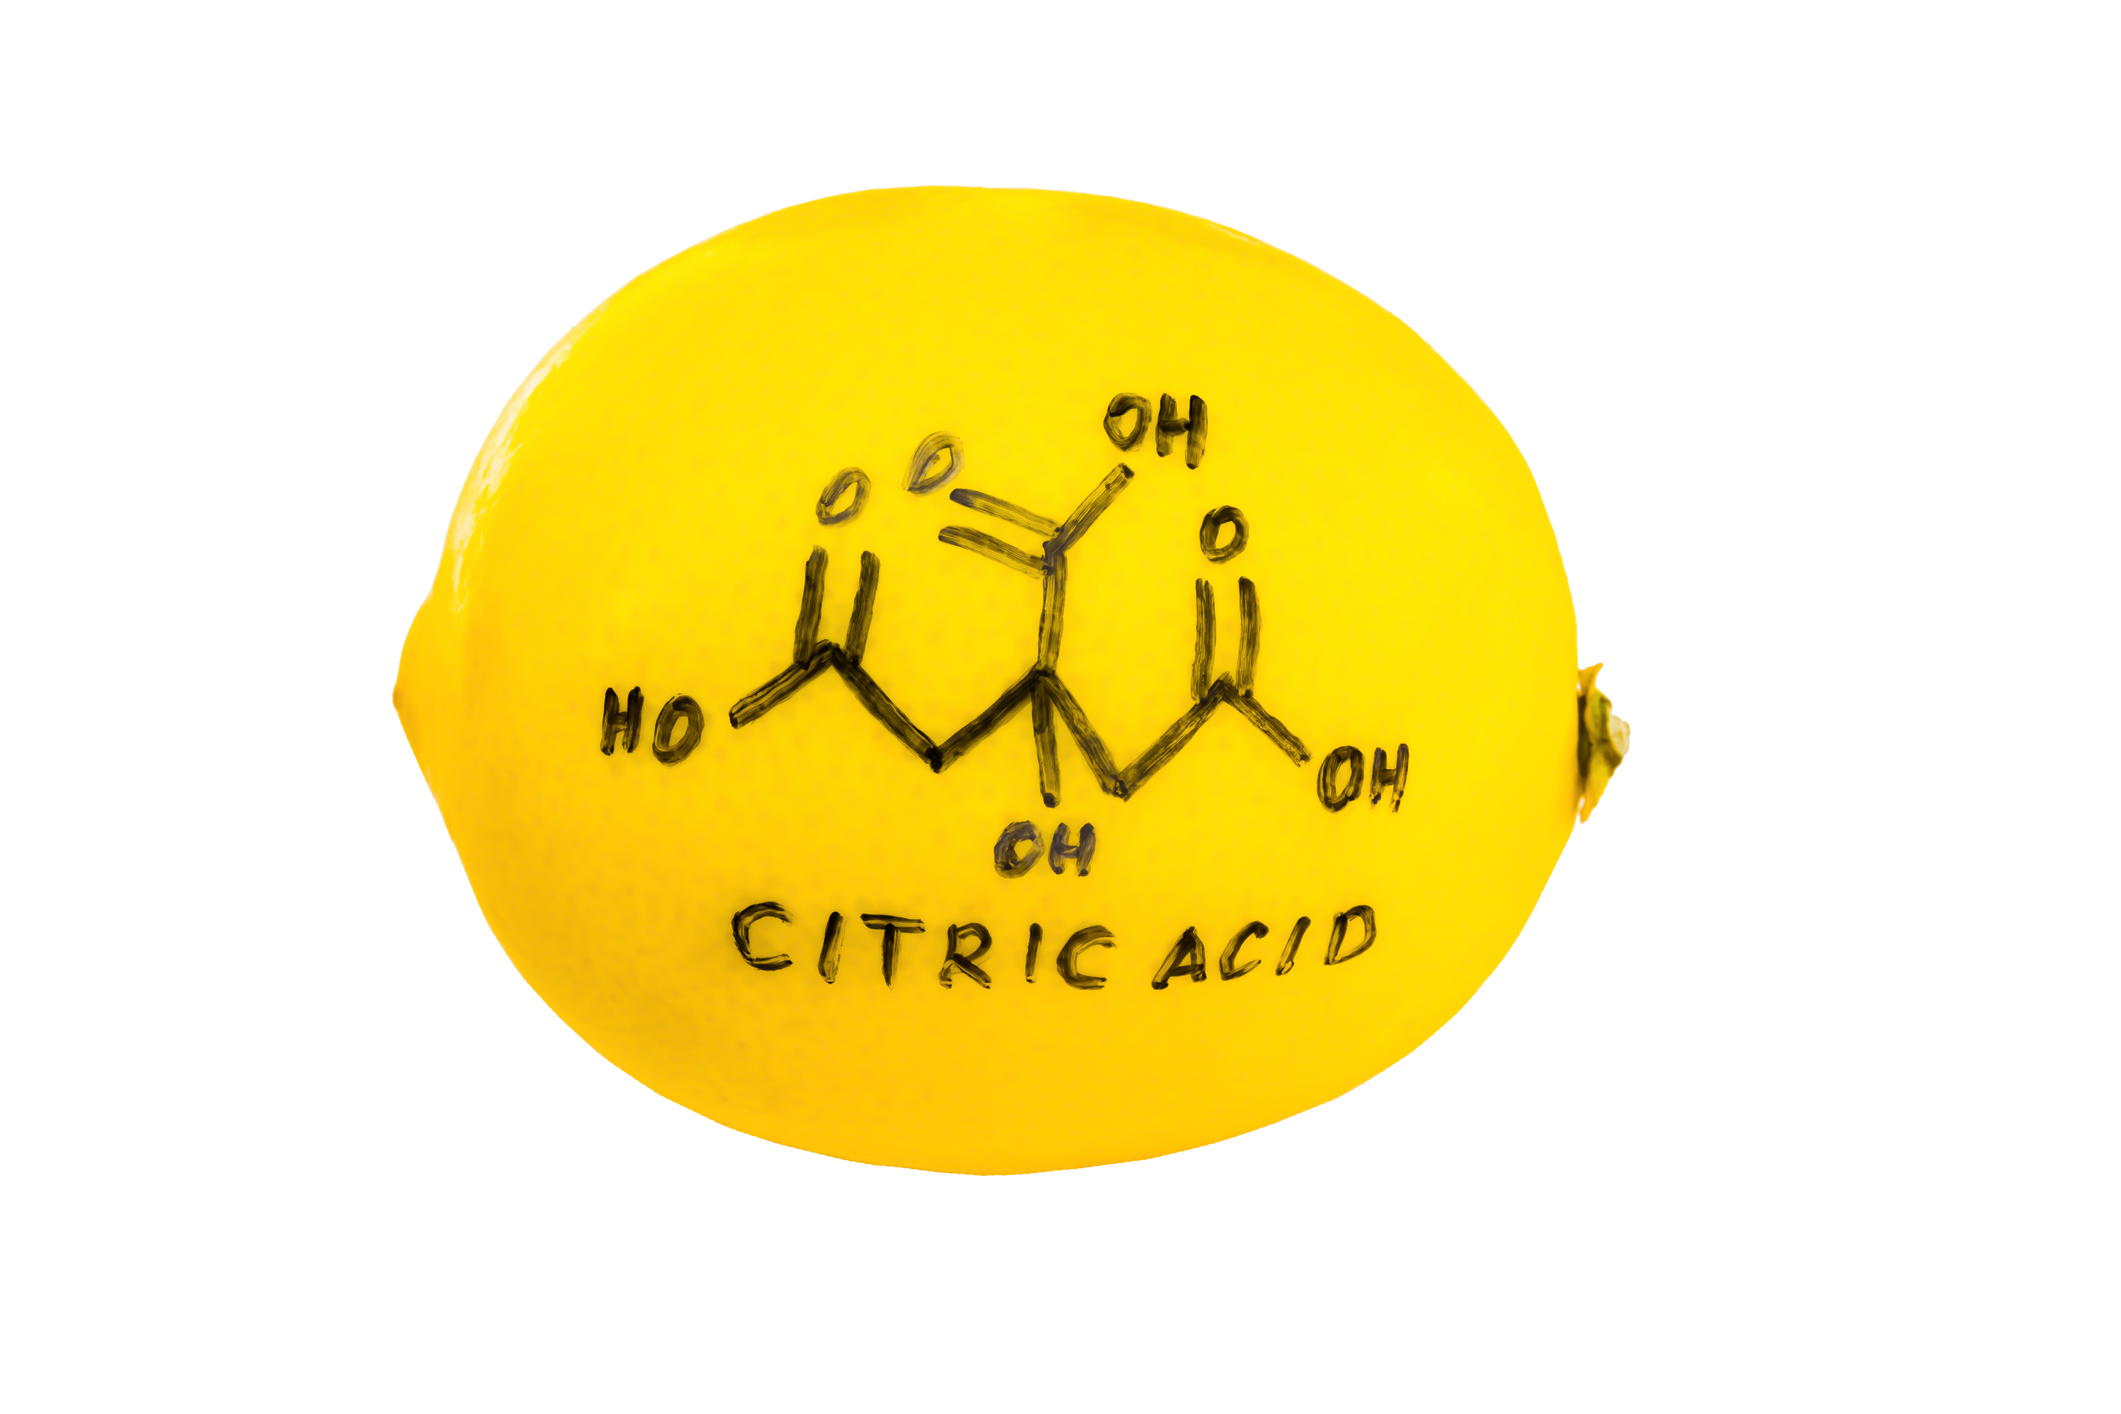 Citric acid formula written in marker on a lemon